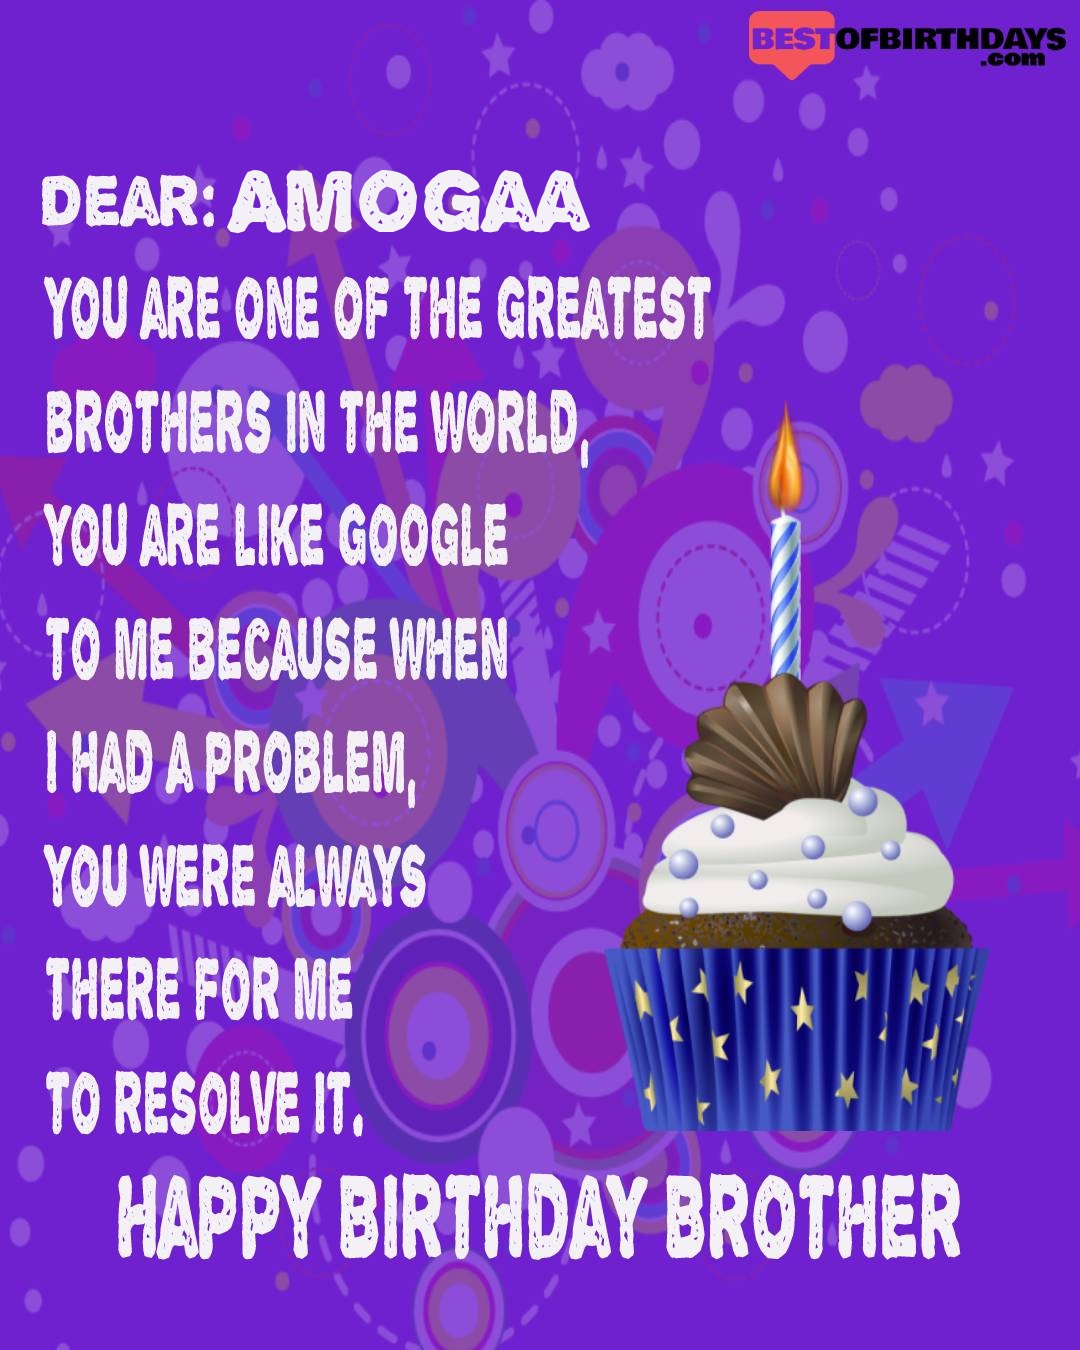 Happy birthday amogaa bhai brother bro